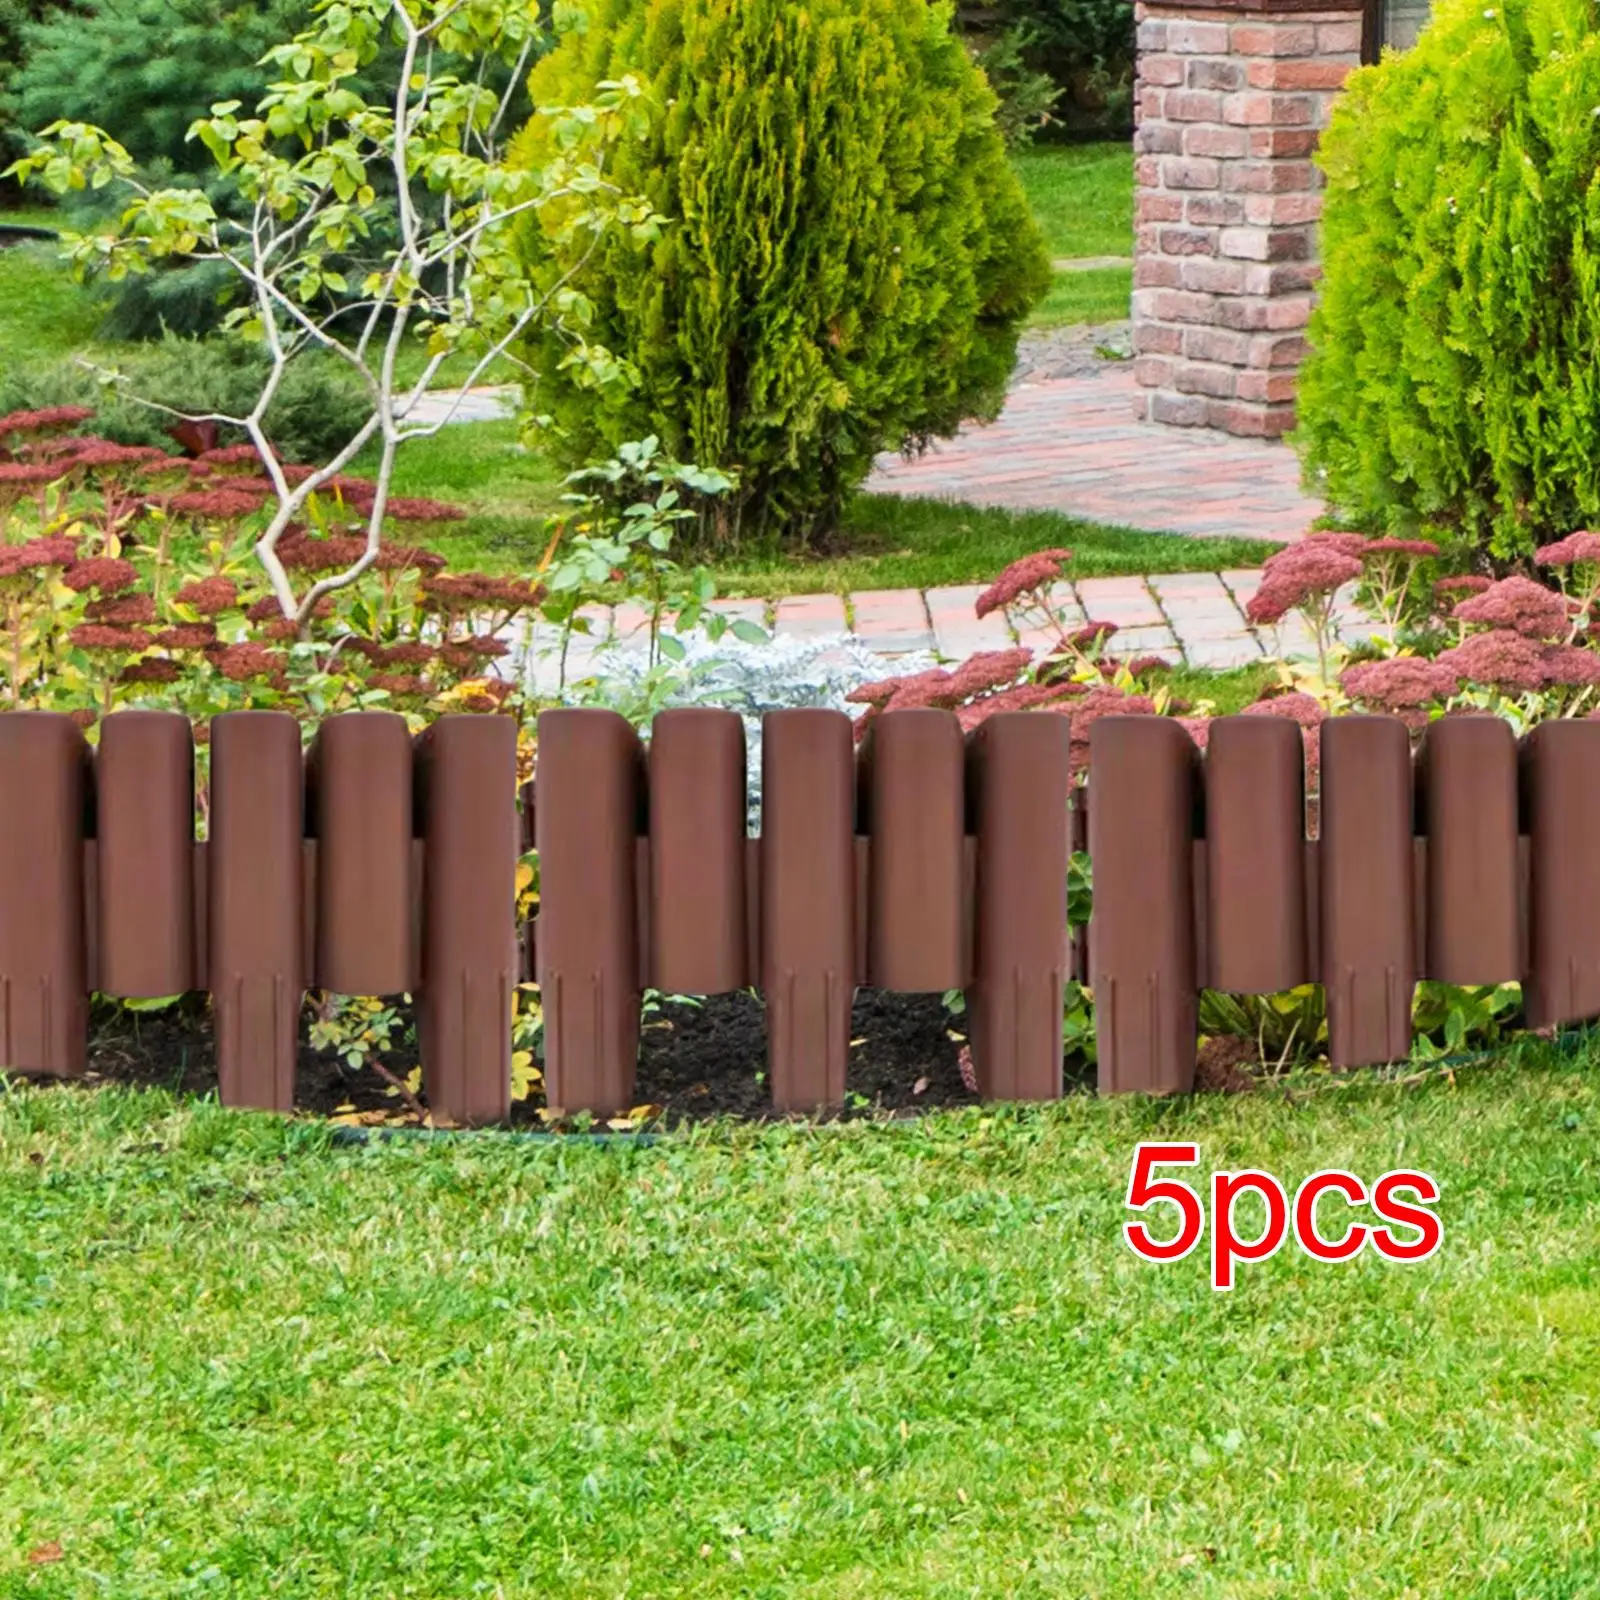 5Pcs Garden Edging Border Decorative Barrier Fence Fence Border for Outdoor Garden Patio Walkway Flower Lawn Edge Landscaping